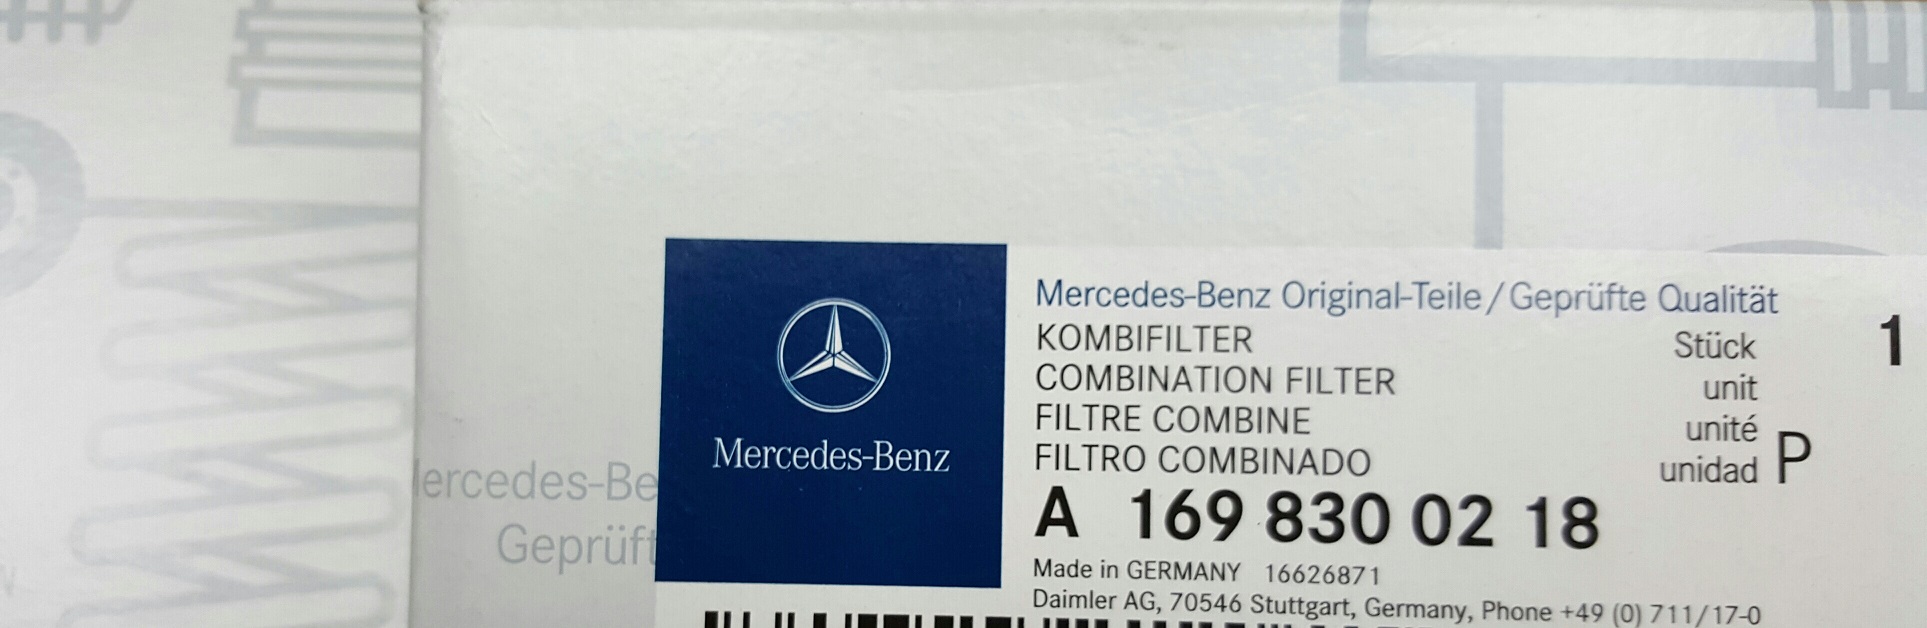 Mercedes parts. Mercedes Benz Original Teile сборка. Mercedes n007603012102 кольцо УПЛ.Mercedes. N007603012102 размер. N007603012102.